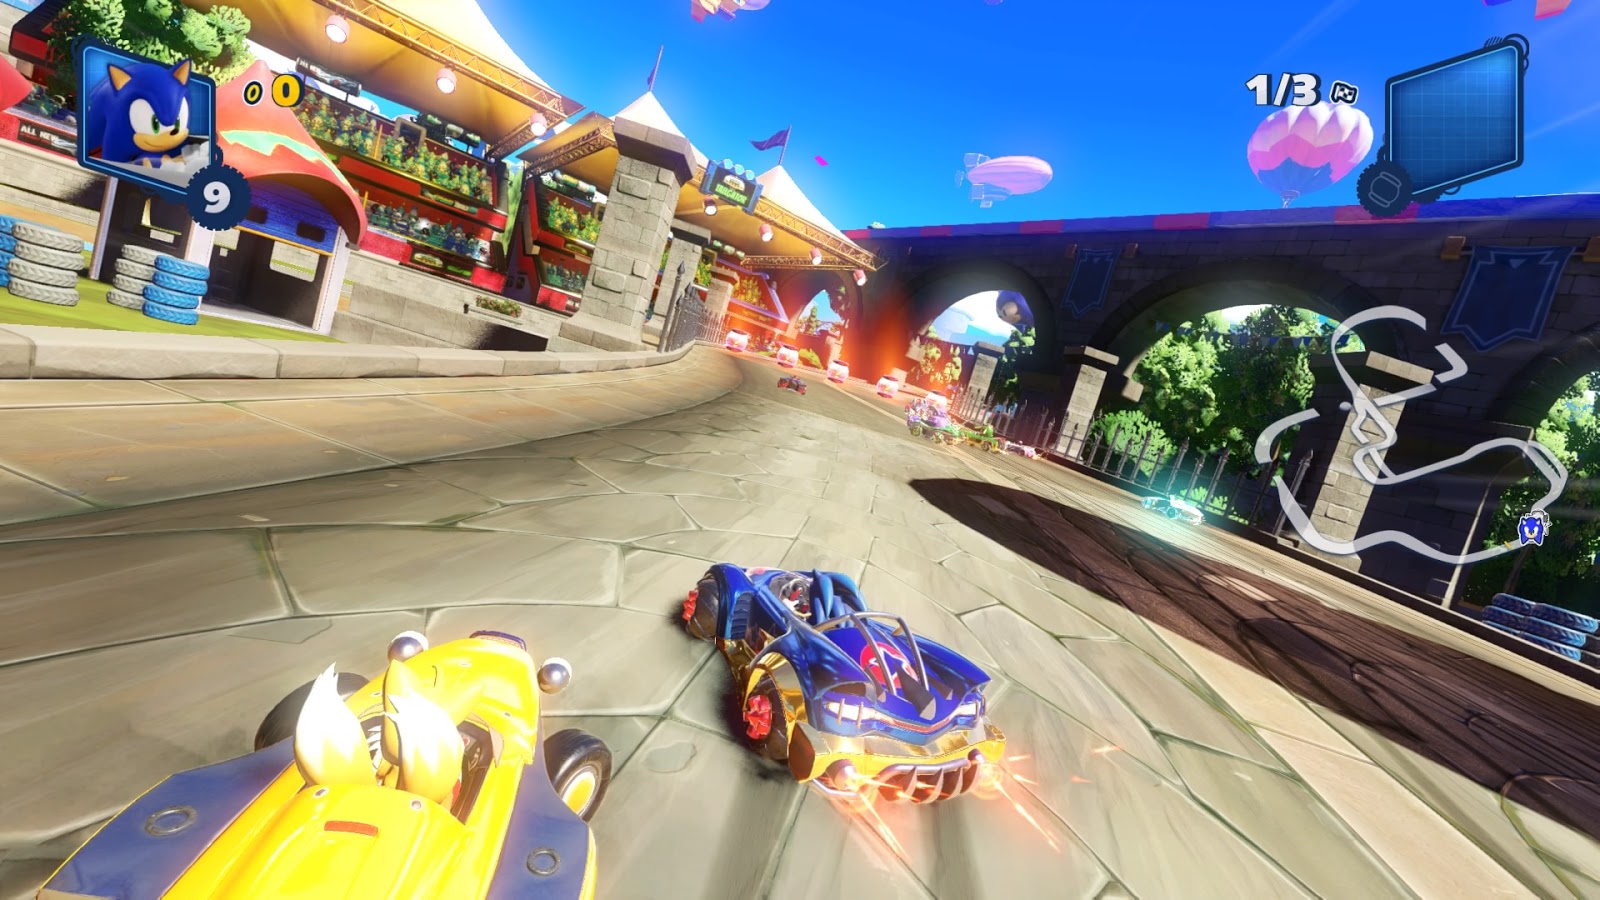 Team Sonic Racing para PS4